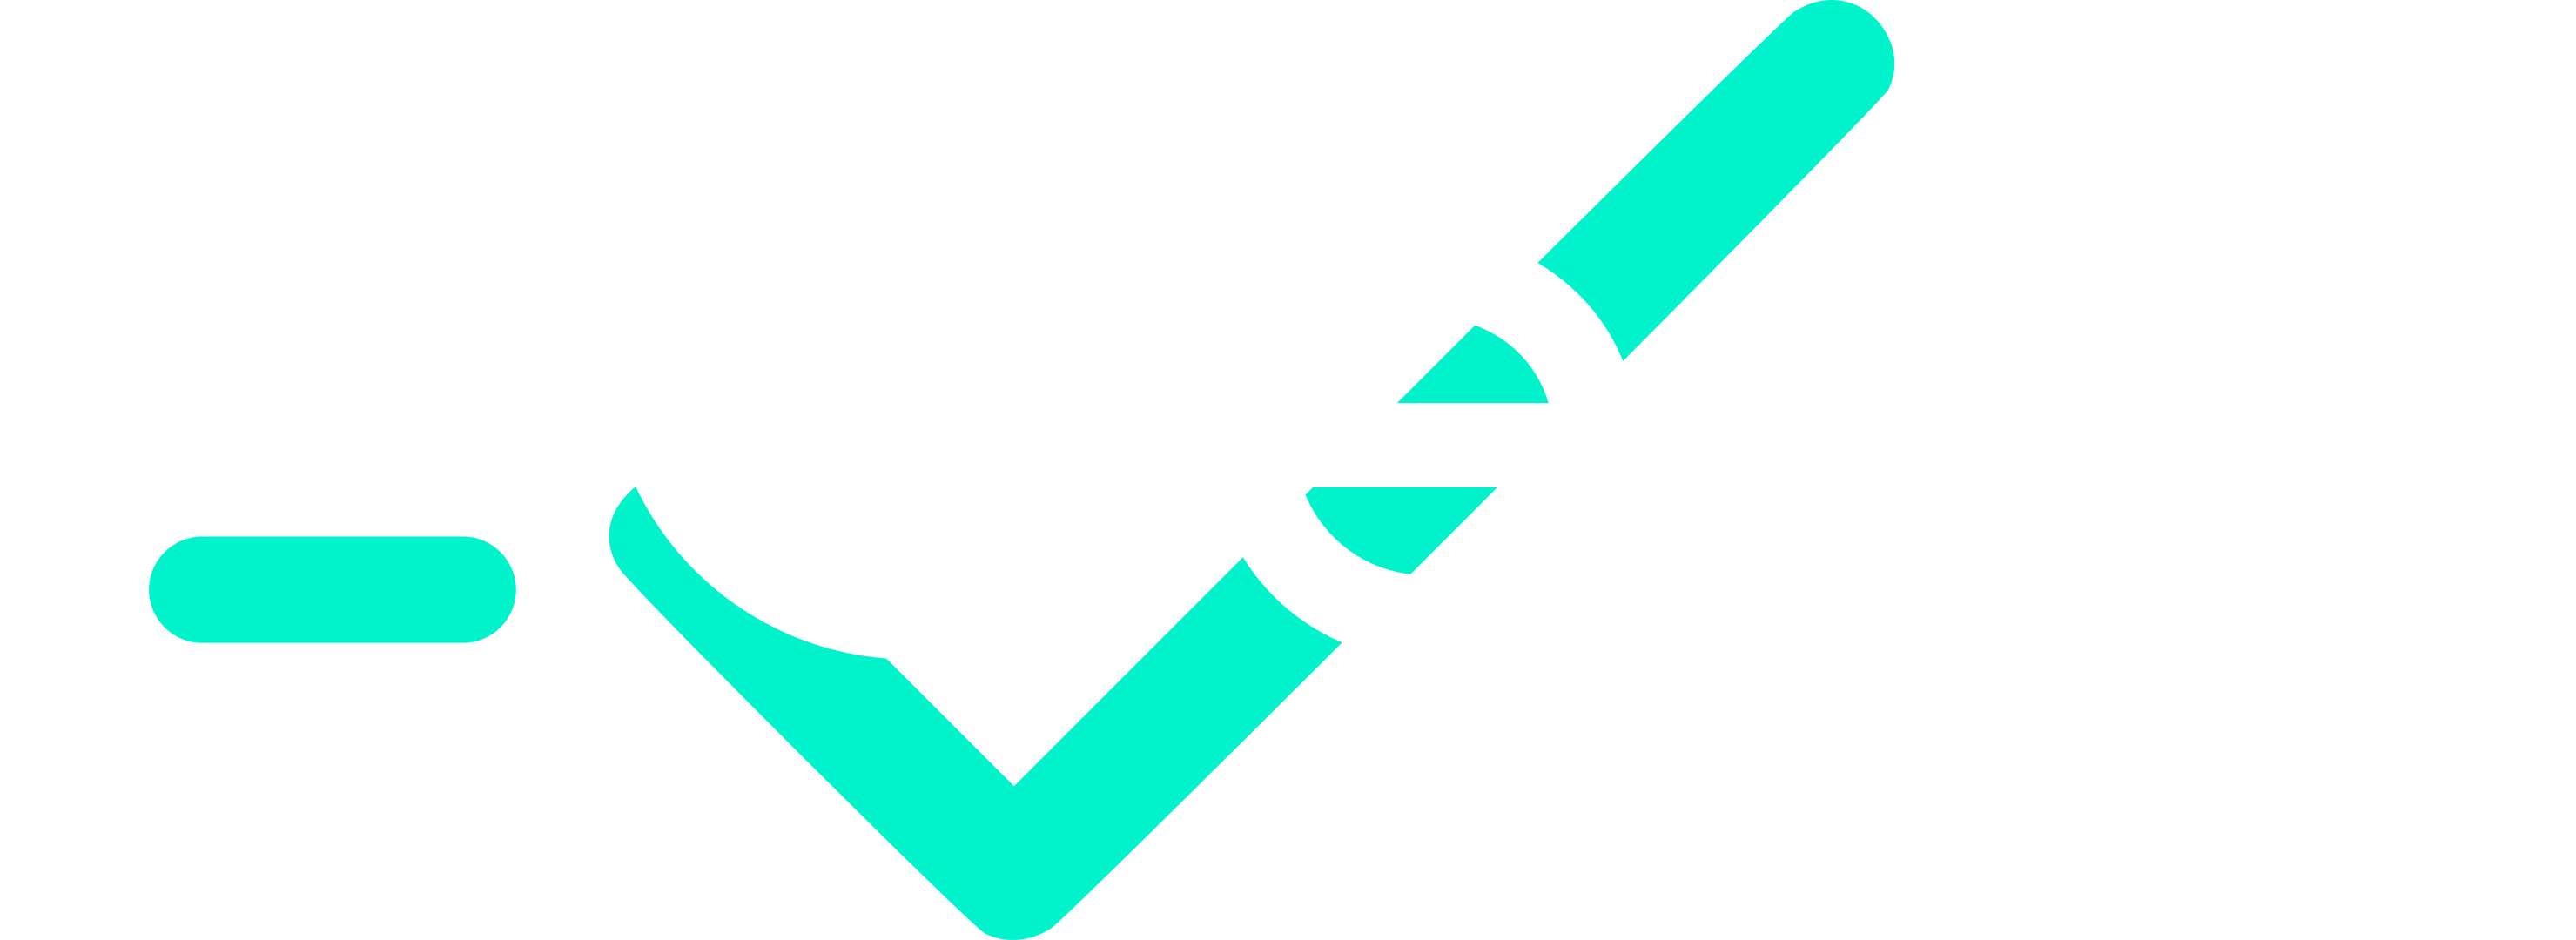 Logo de 2Certs